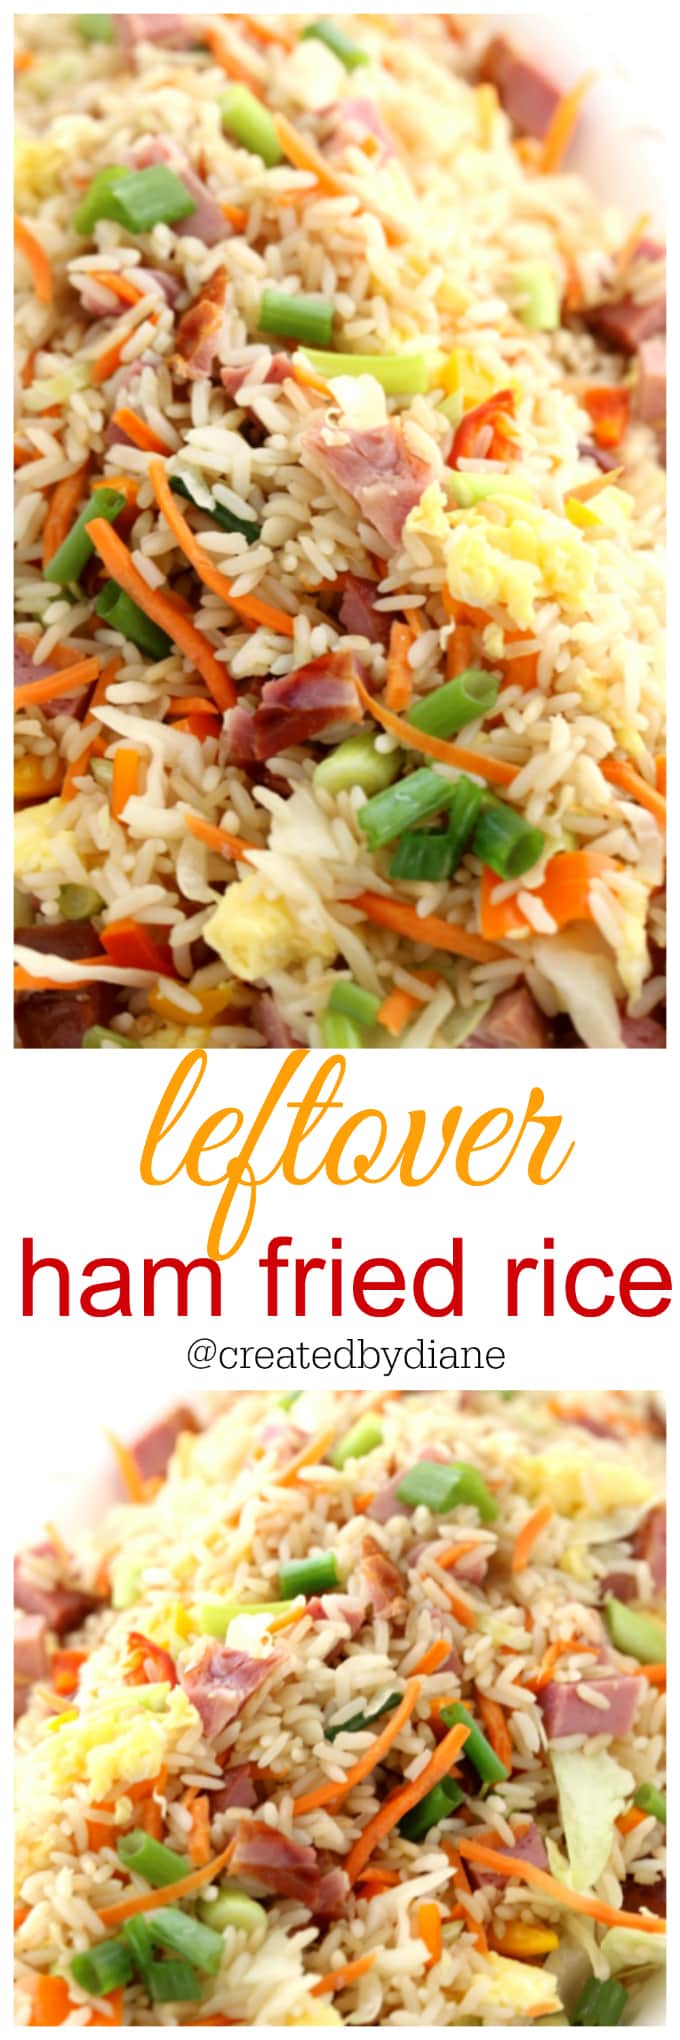 leftover ham fried rice recipes great for holiday ham, breakfast recipe @createdbydiane